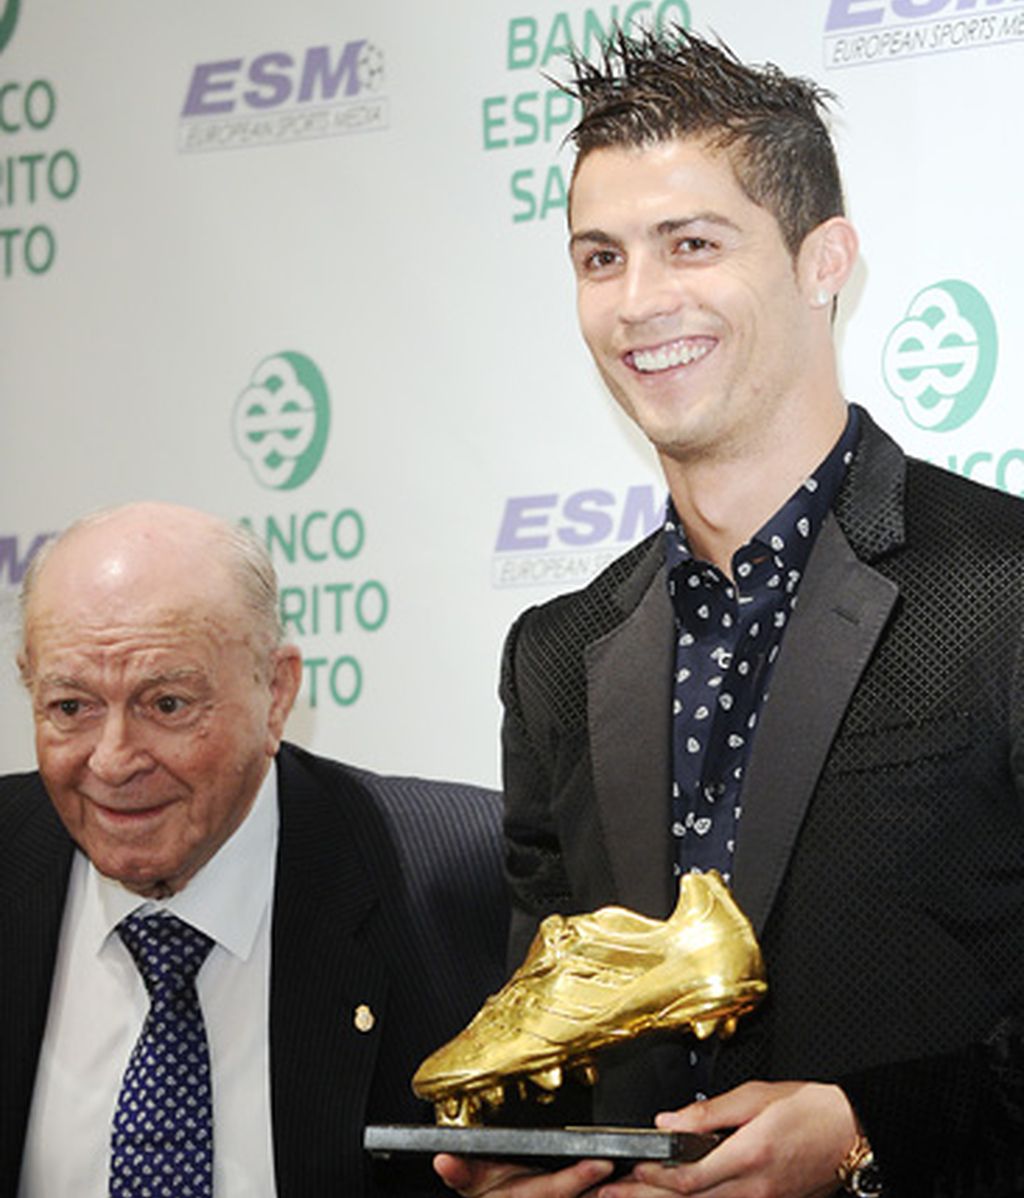 El anillaco de Irina Shayk en la entrega de la Bota de Oro a Cristiano Ronaldo